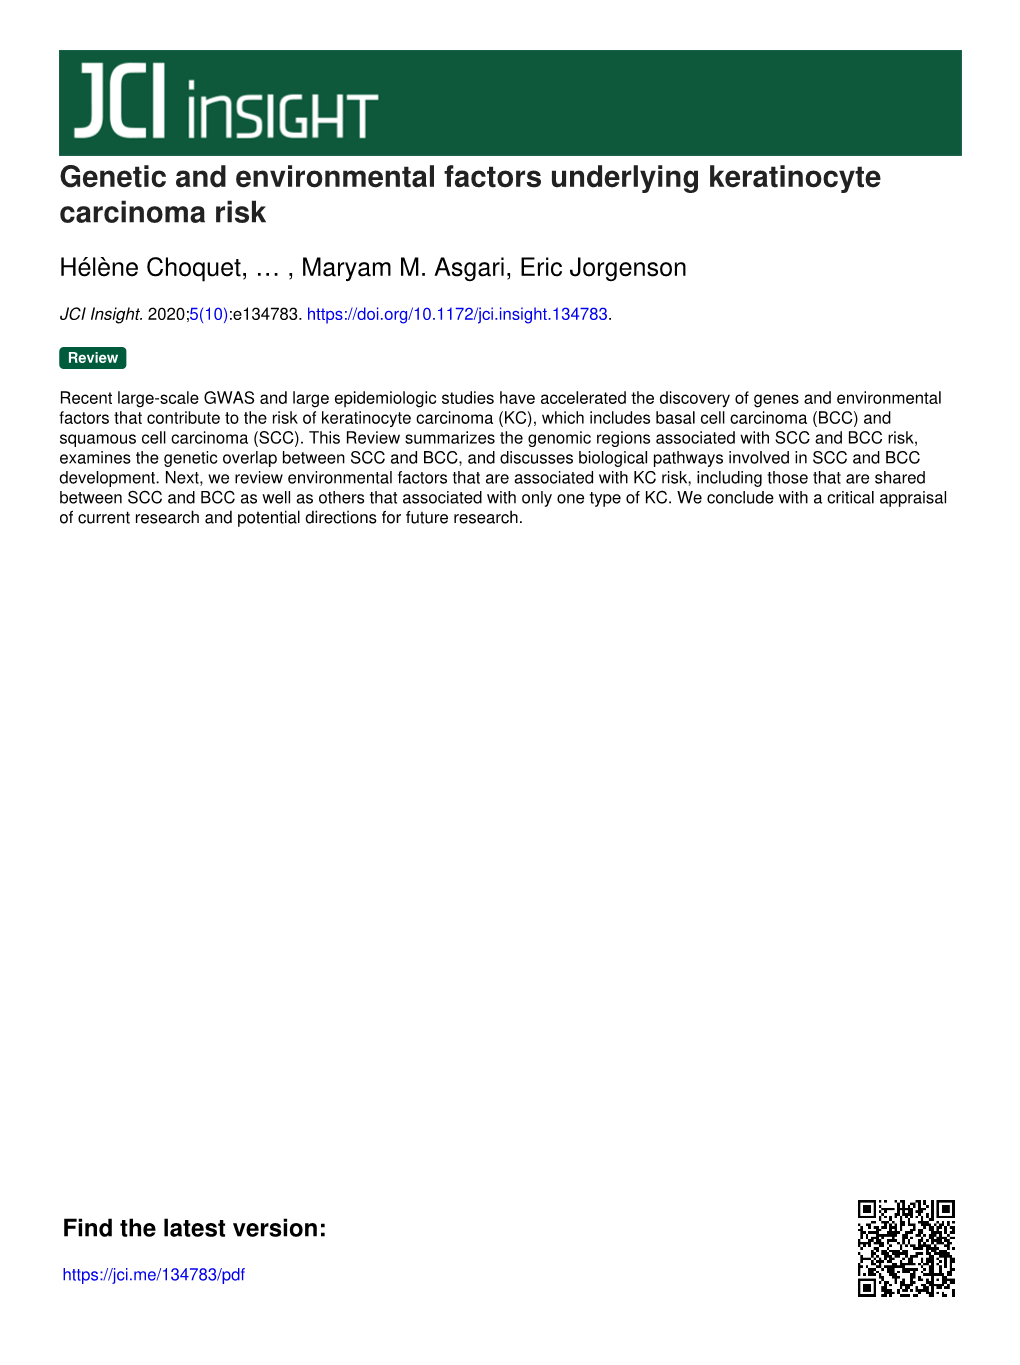 Genetic and Environmental Factors Underlying Keratinocyte Carcinoma Risk